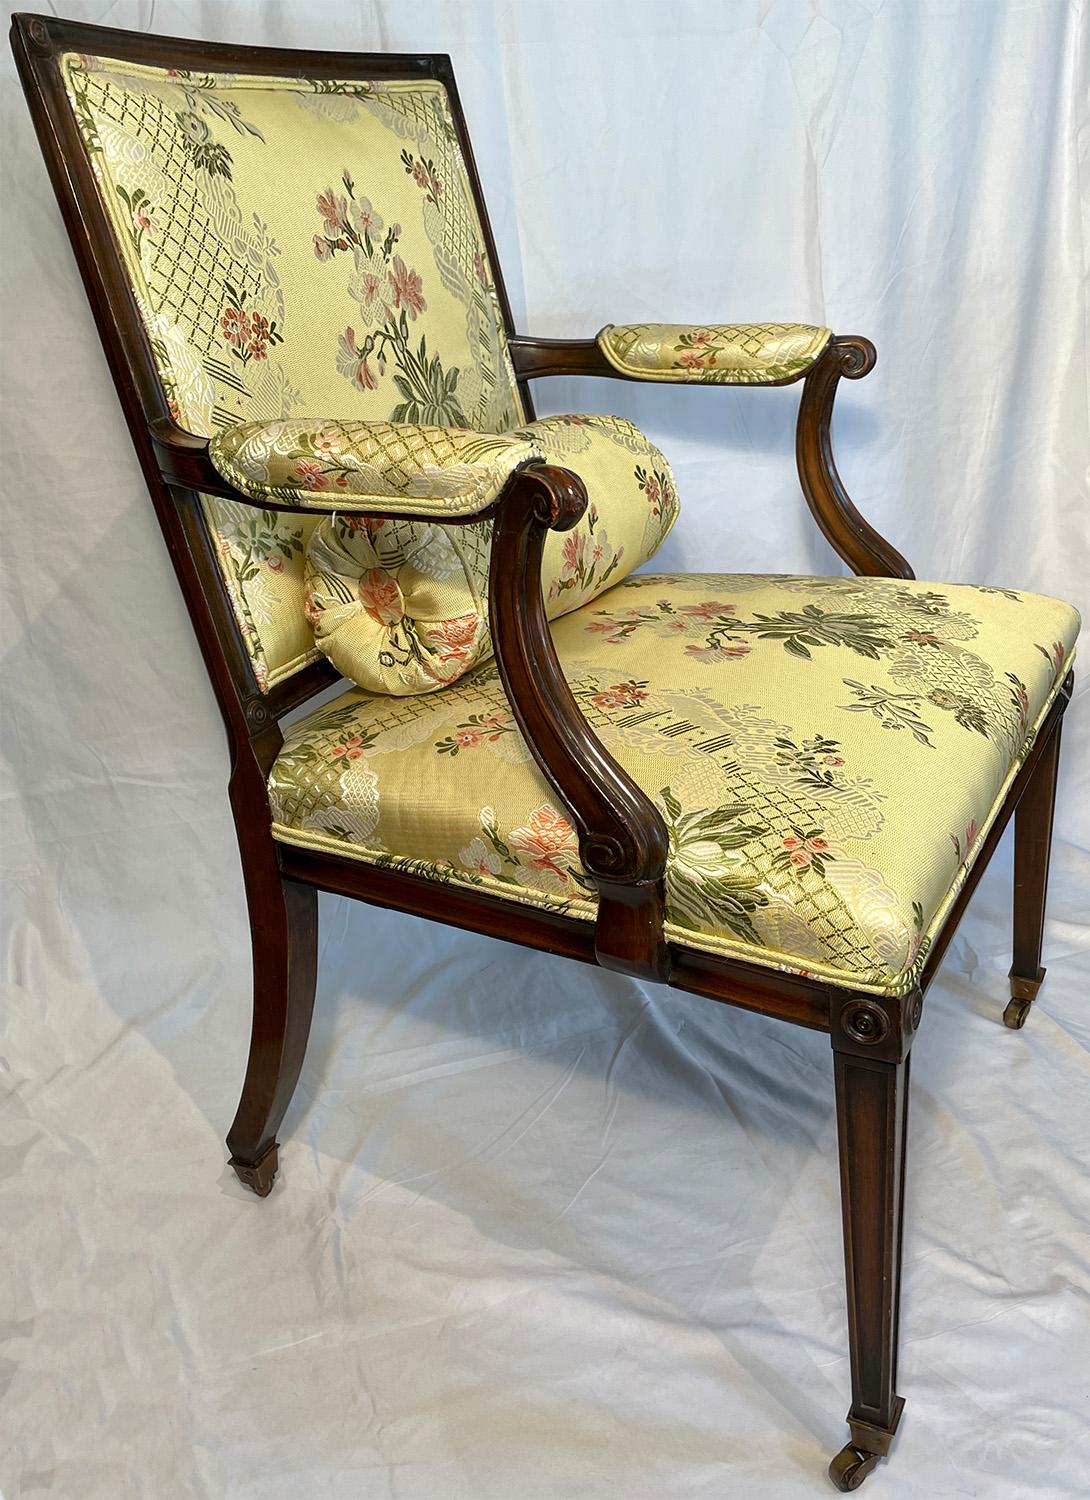 Antique English Mahogany desk chair with Scalamandre Fabric, Circa 1850-1860.